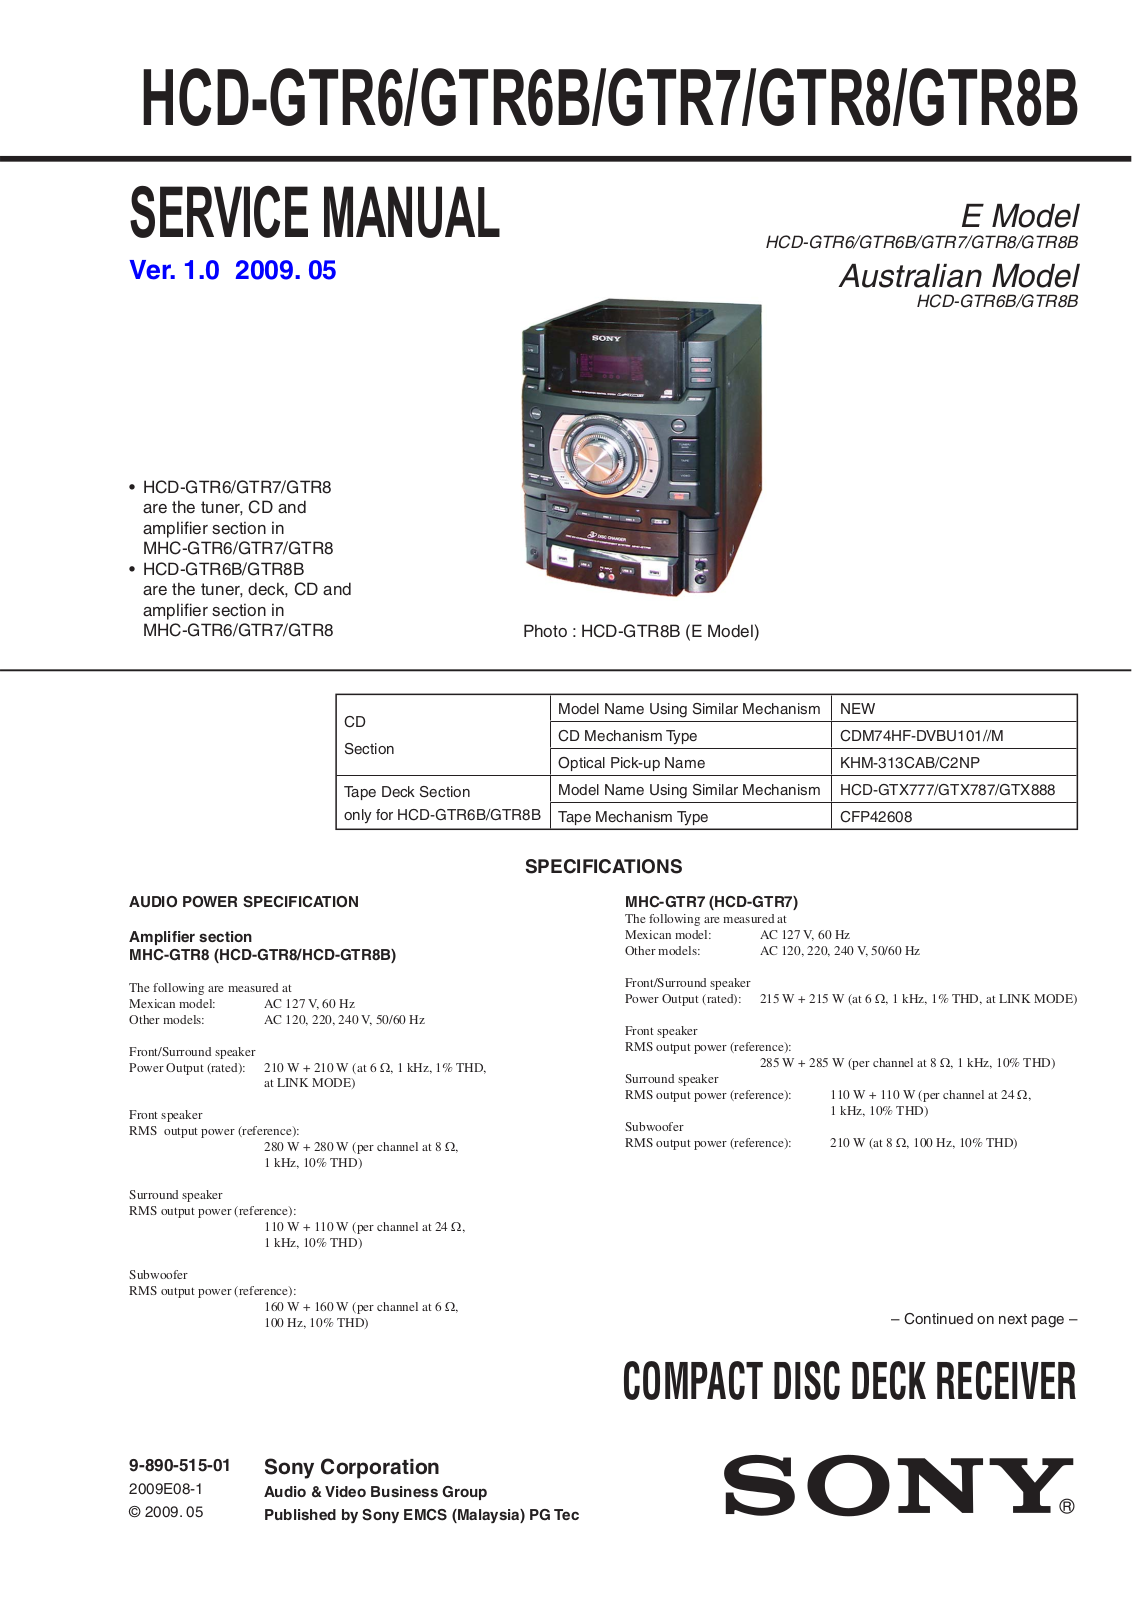 SONY HCD-GTR6, HCD-GTR6B, HCD-GTR7, HCD-GTR8, HCD-GTR8B Service Manual